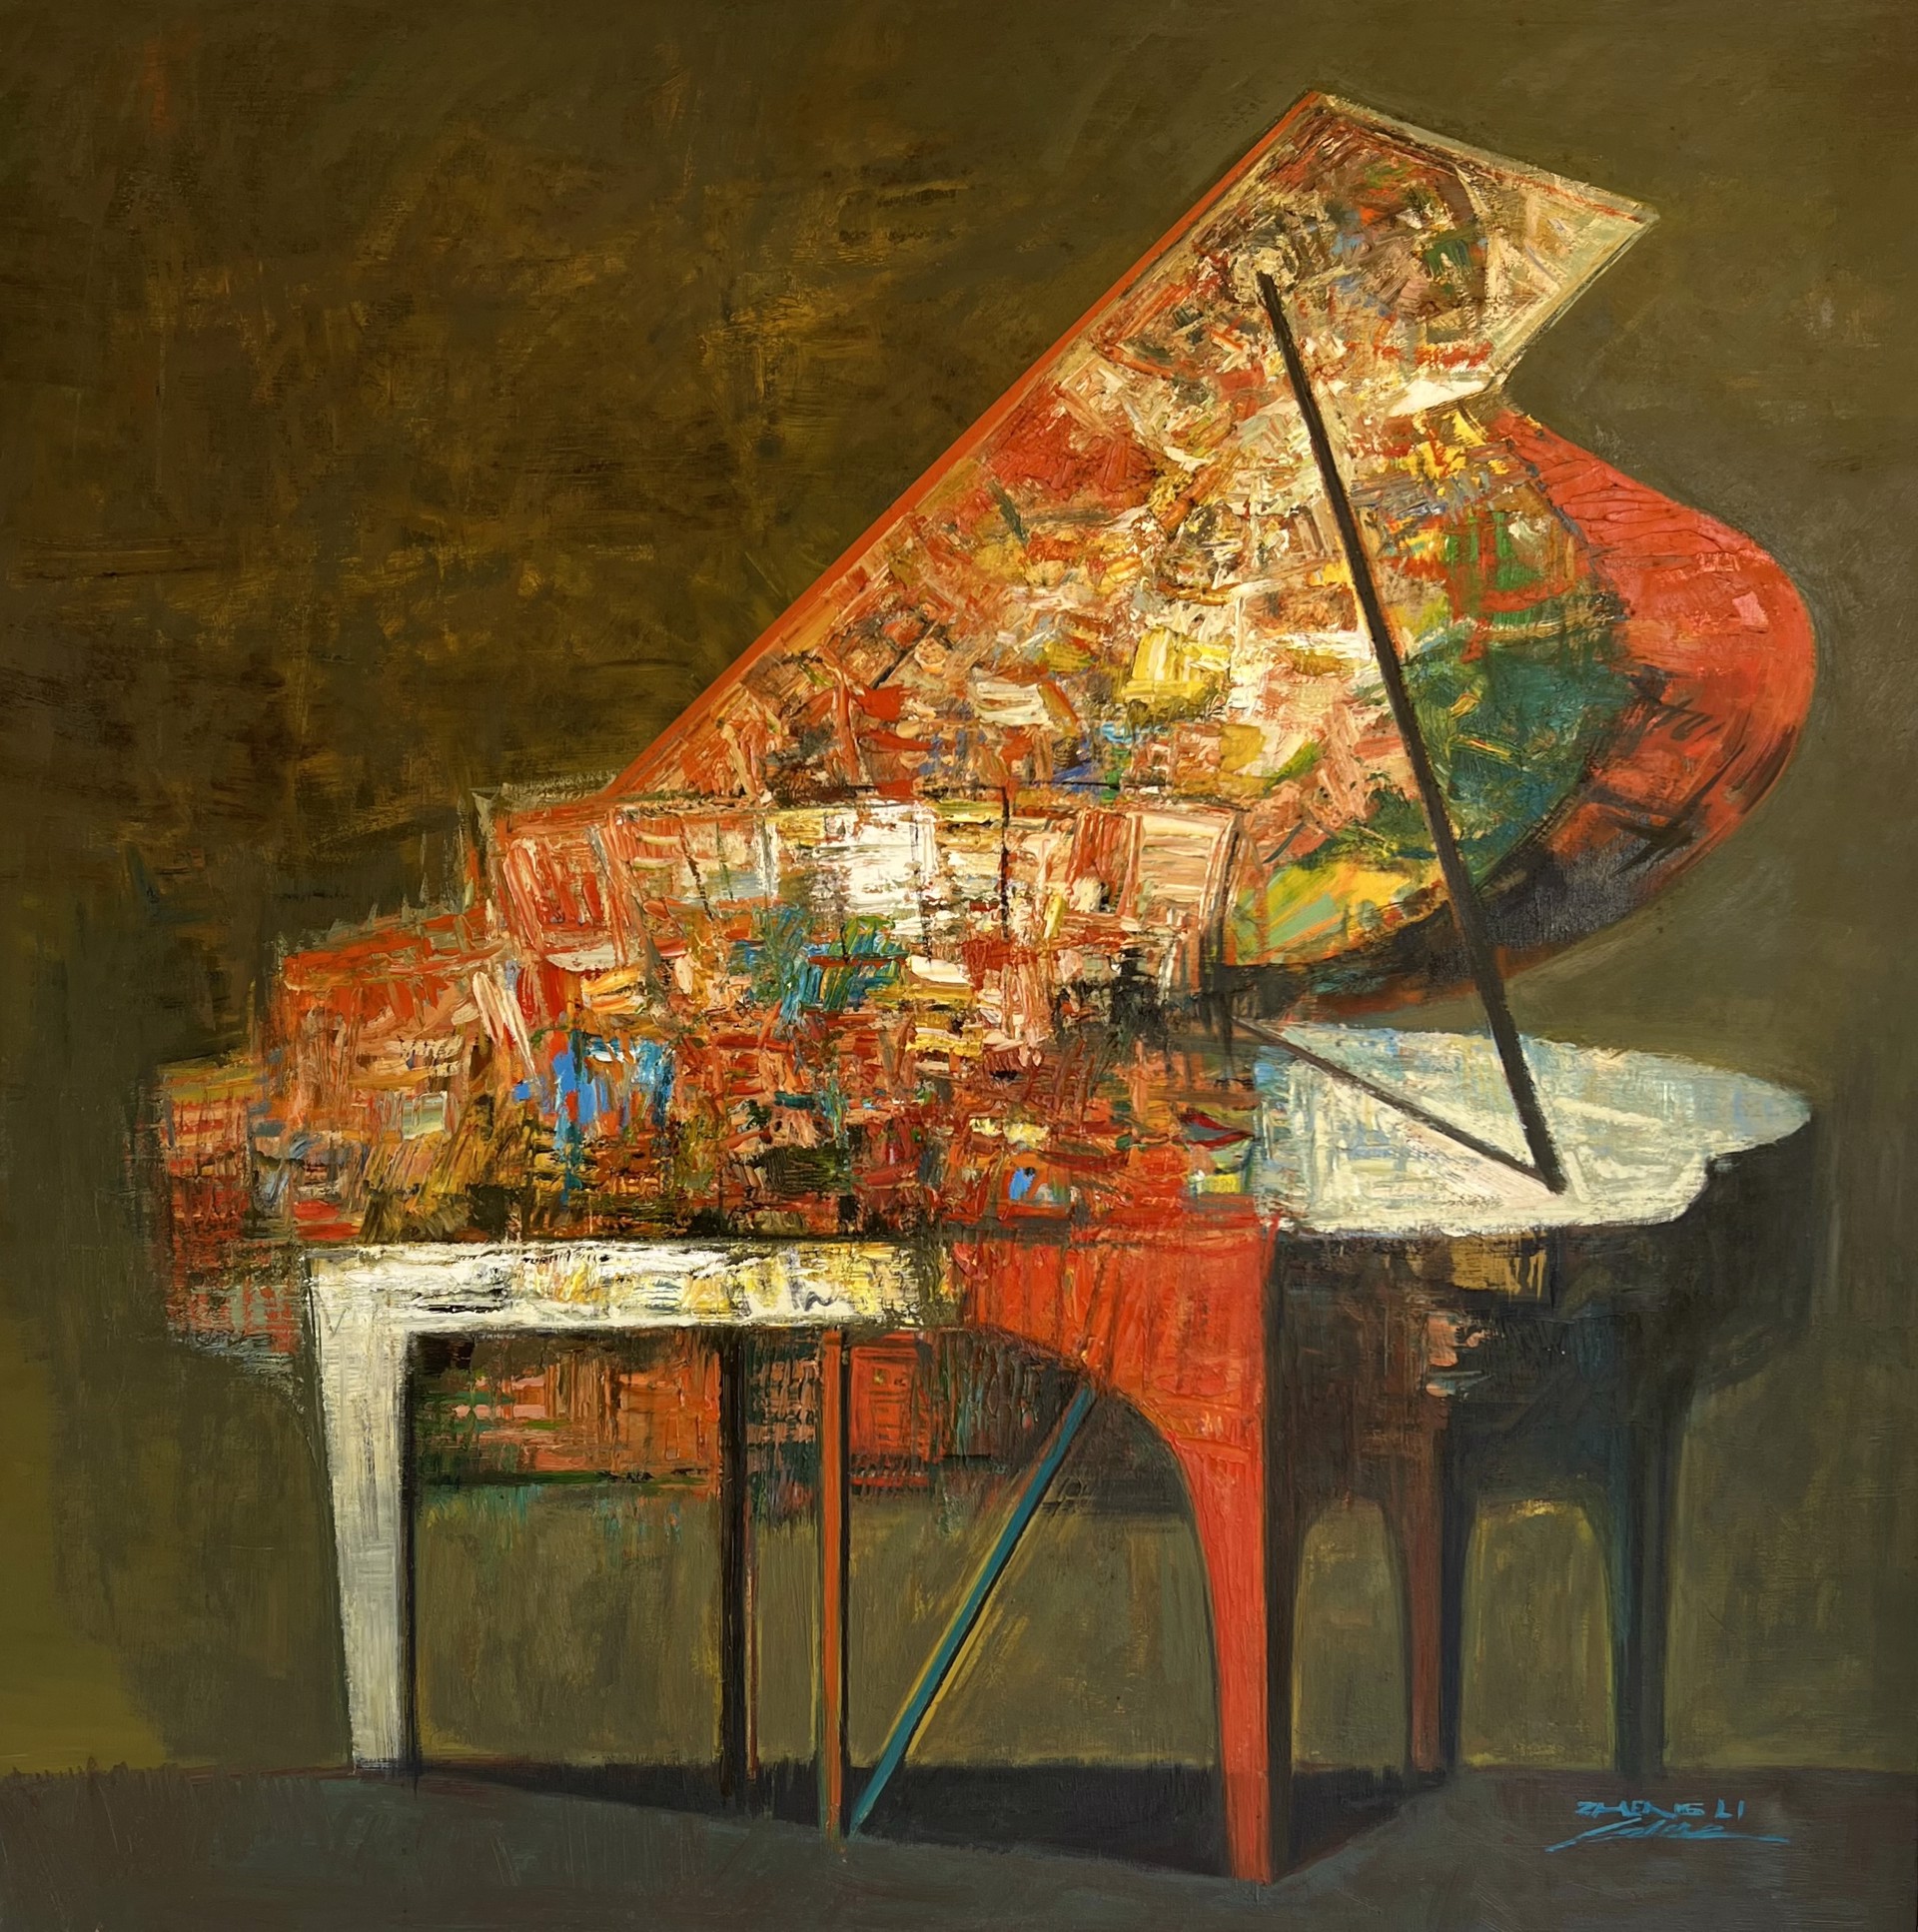 Piano # 2 (Orange) by ZHENG LI